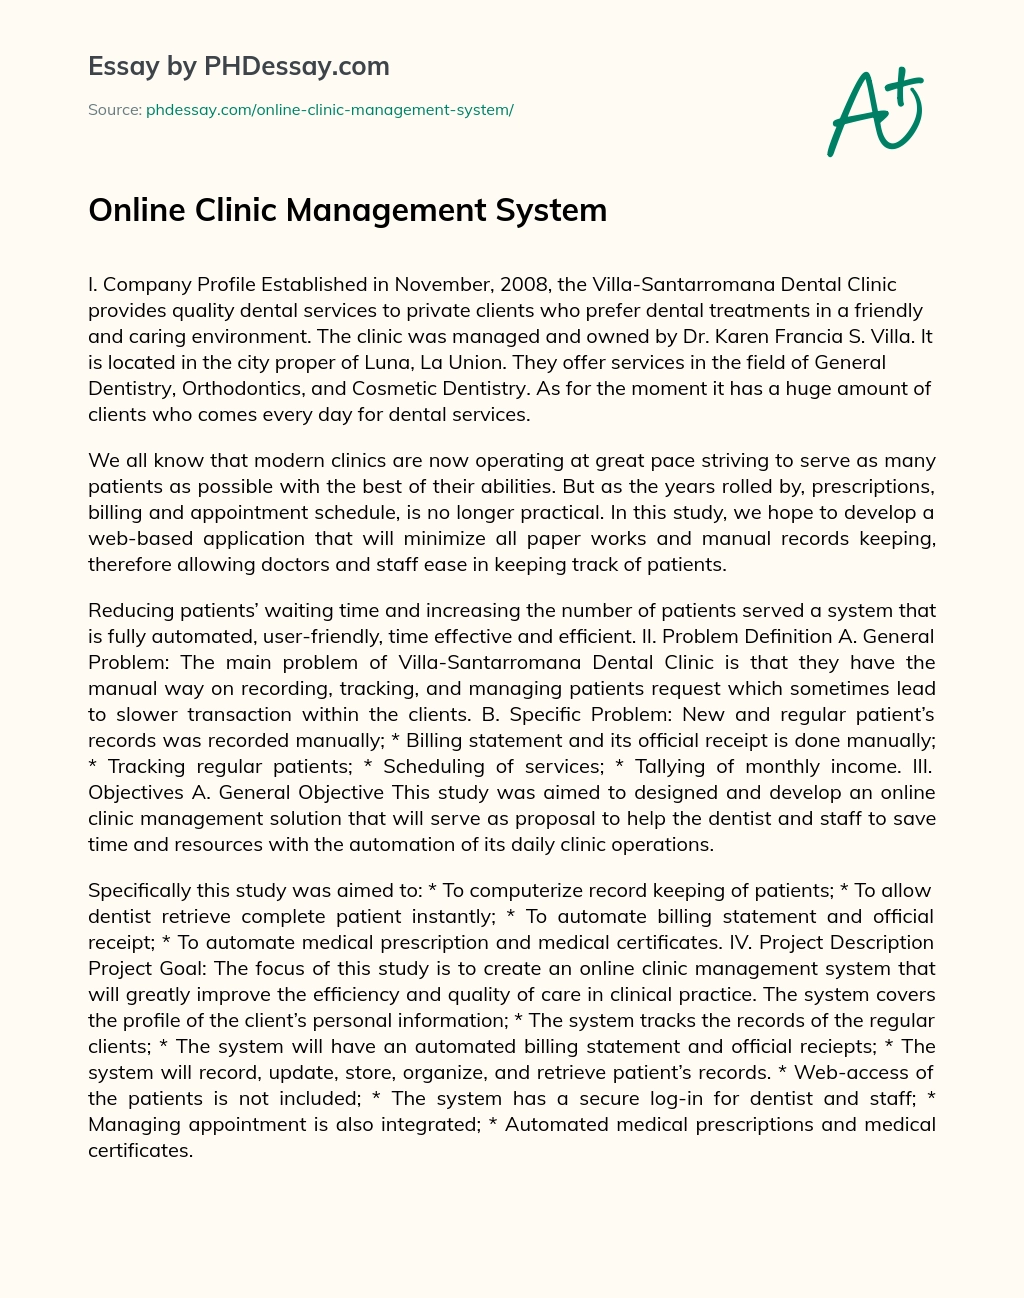 Online Clinic Management System essay